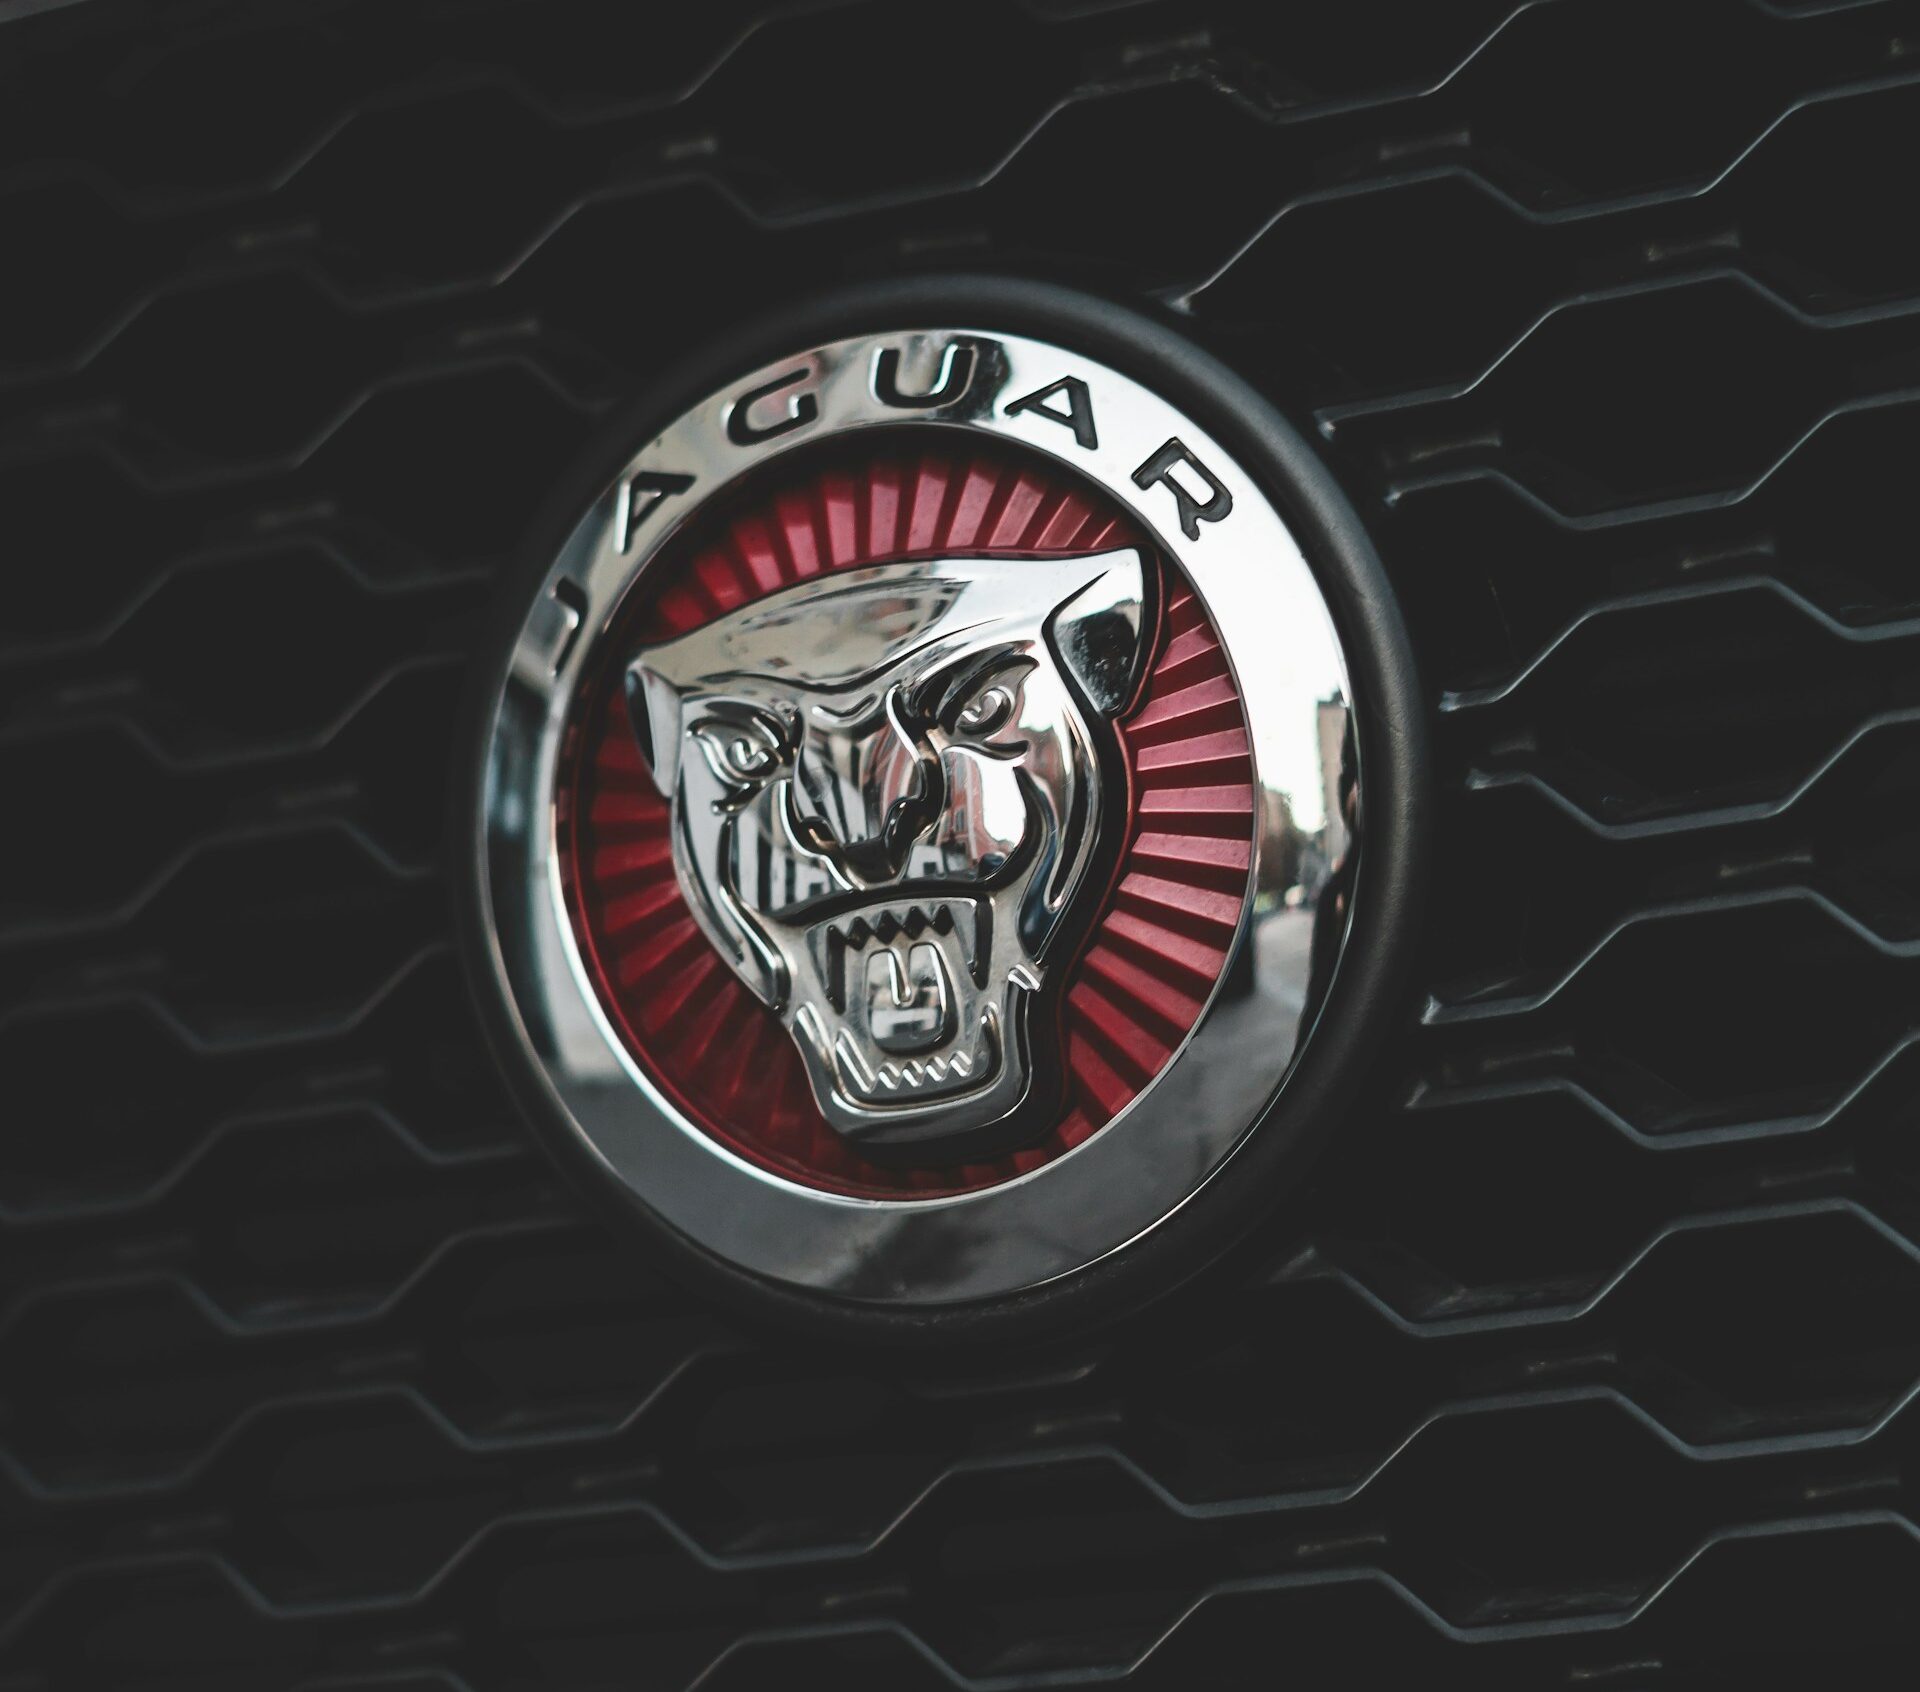 Close-up of a silver Jaguar emblem on the grille of a car.